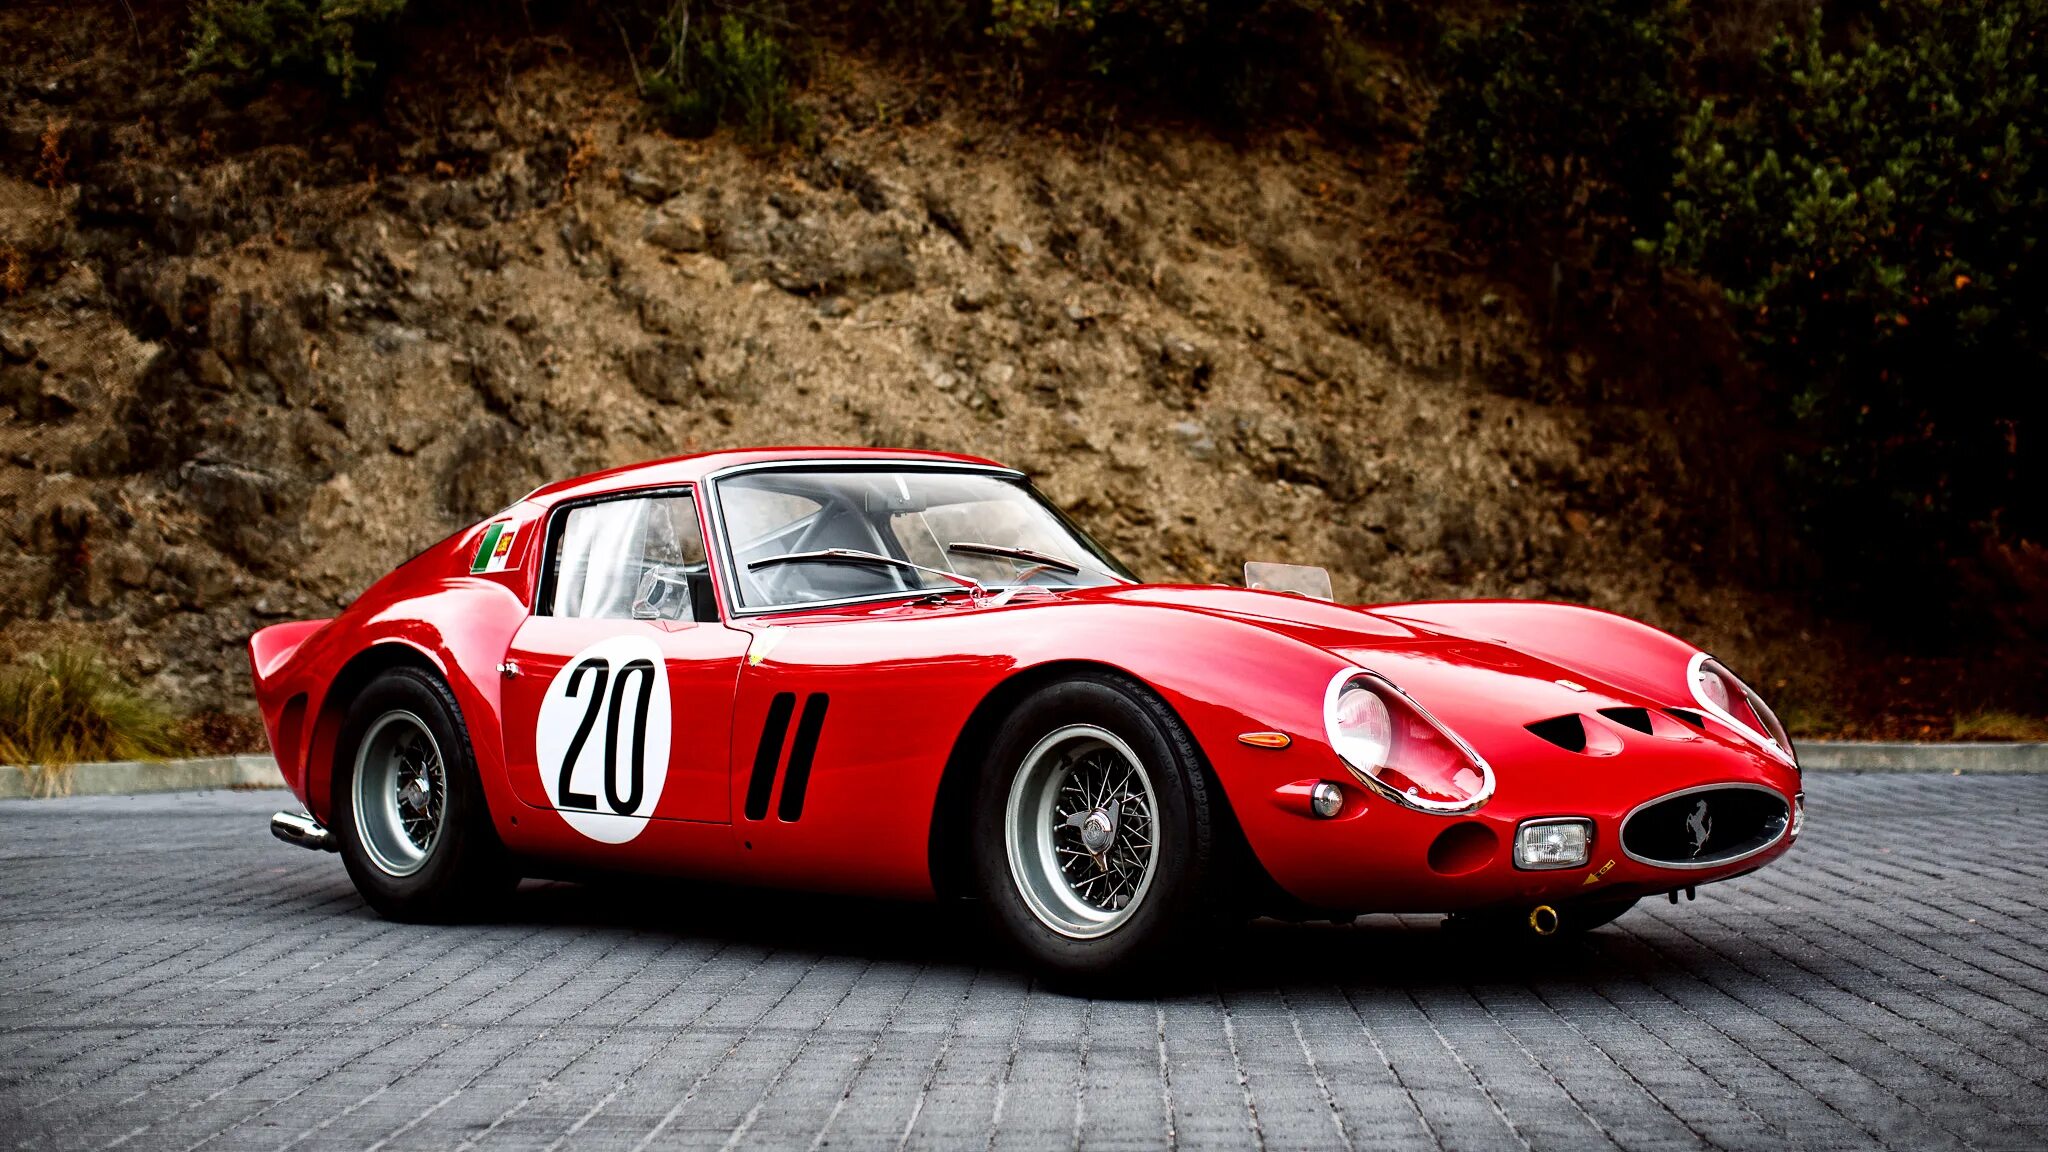 Ferrari gto 1962. Ferrari 250 GTO. Ferrari 250 GTO 1962. 1. Ferrari 250 GTO. Ferrari 250 GTO 1963.